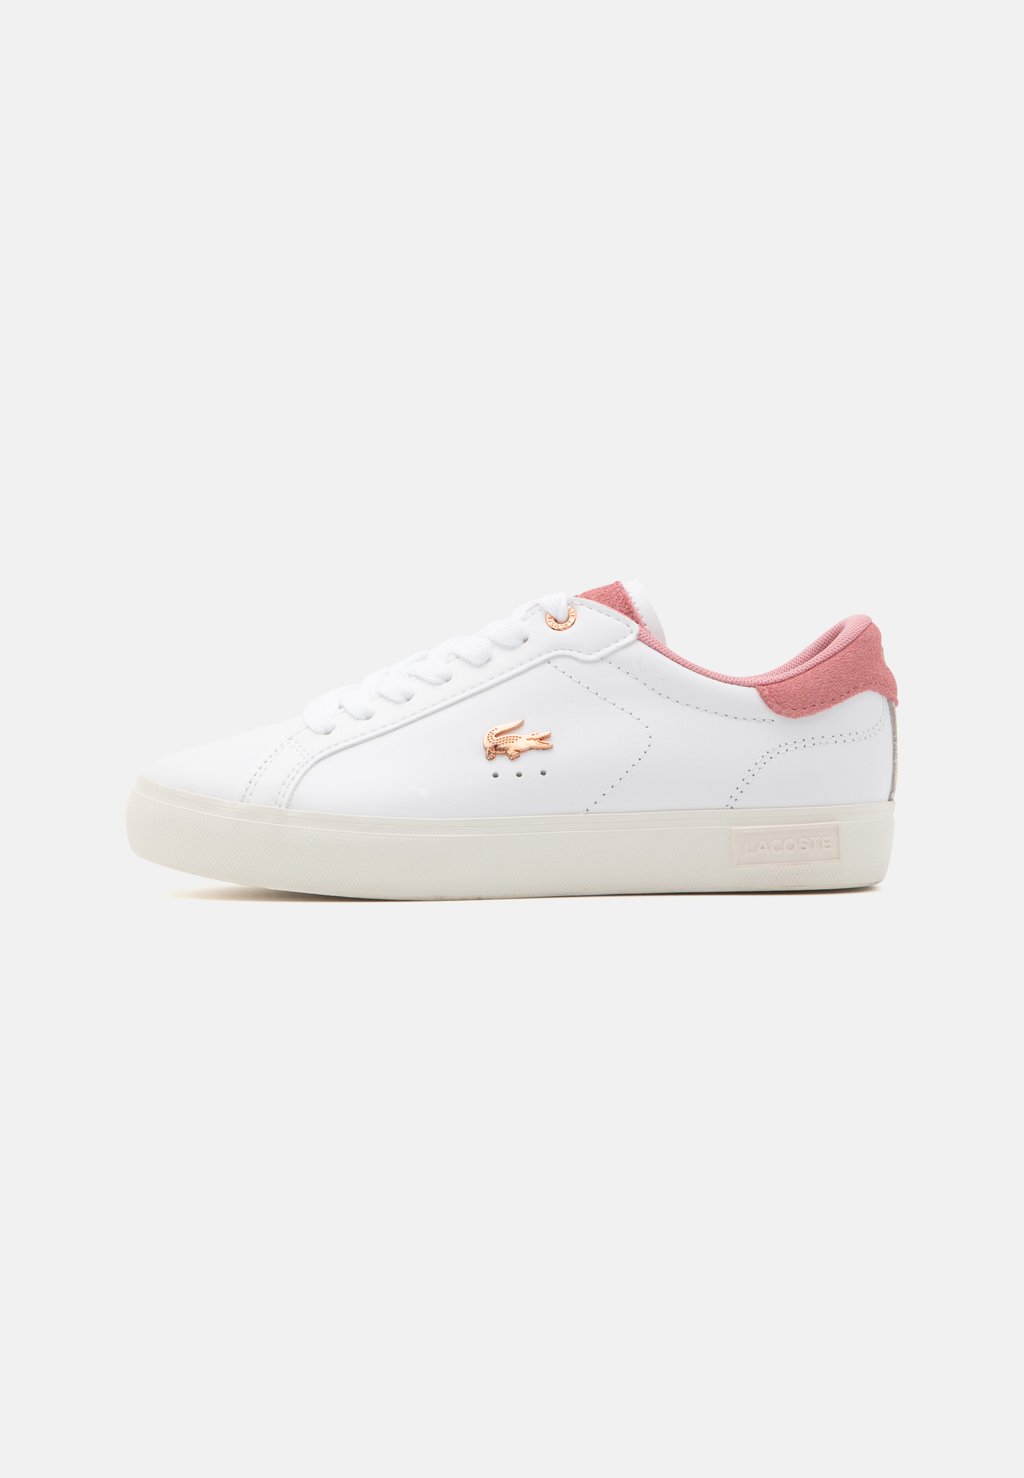 Низкие кроссовки Powercourt Lacoste, цвет white/light pink низкие кроссовки evo lacoste цвет white pink